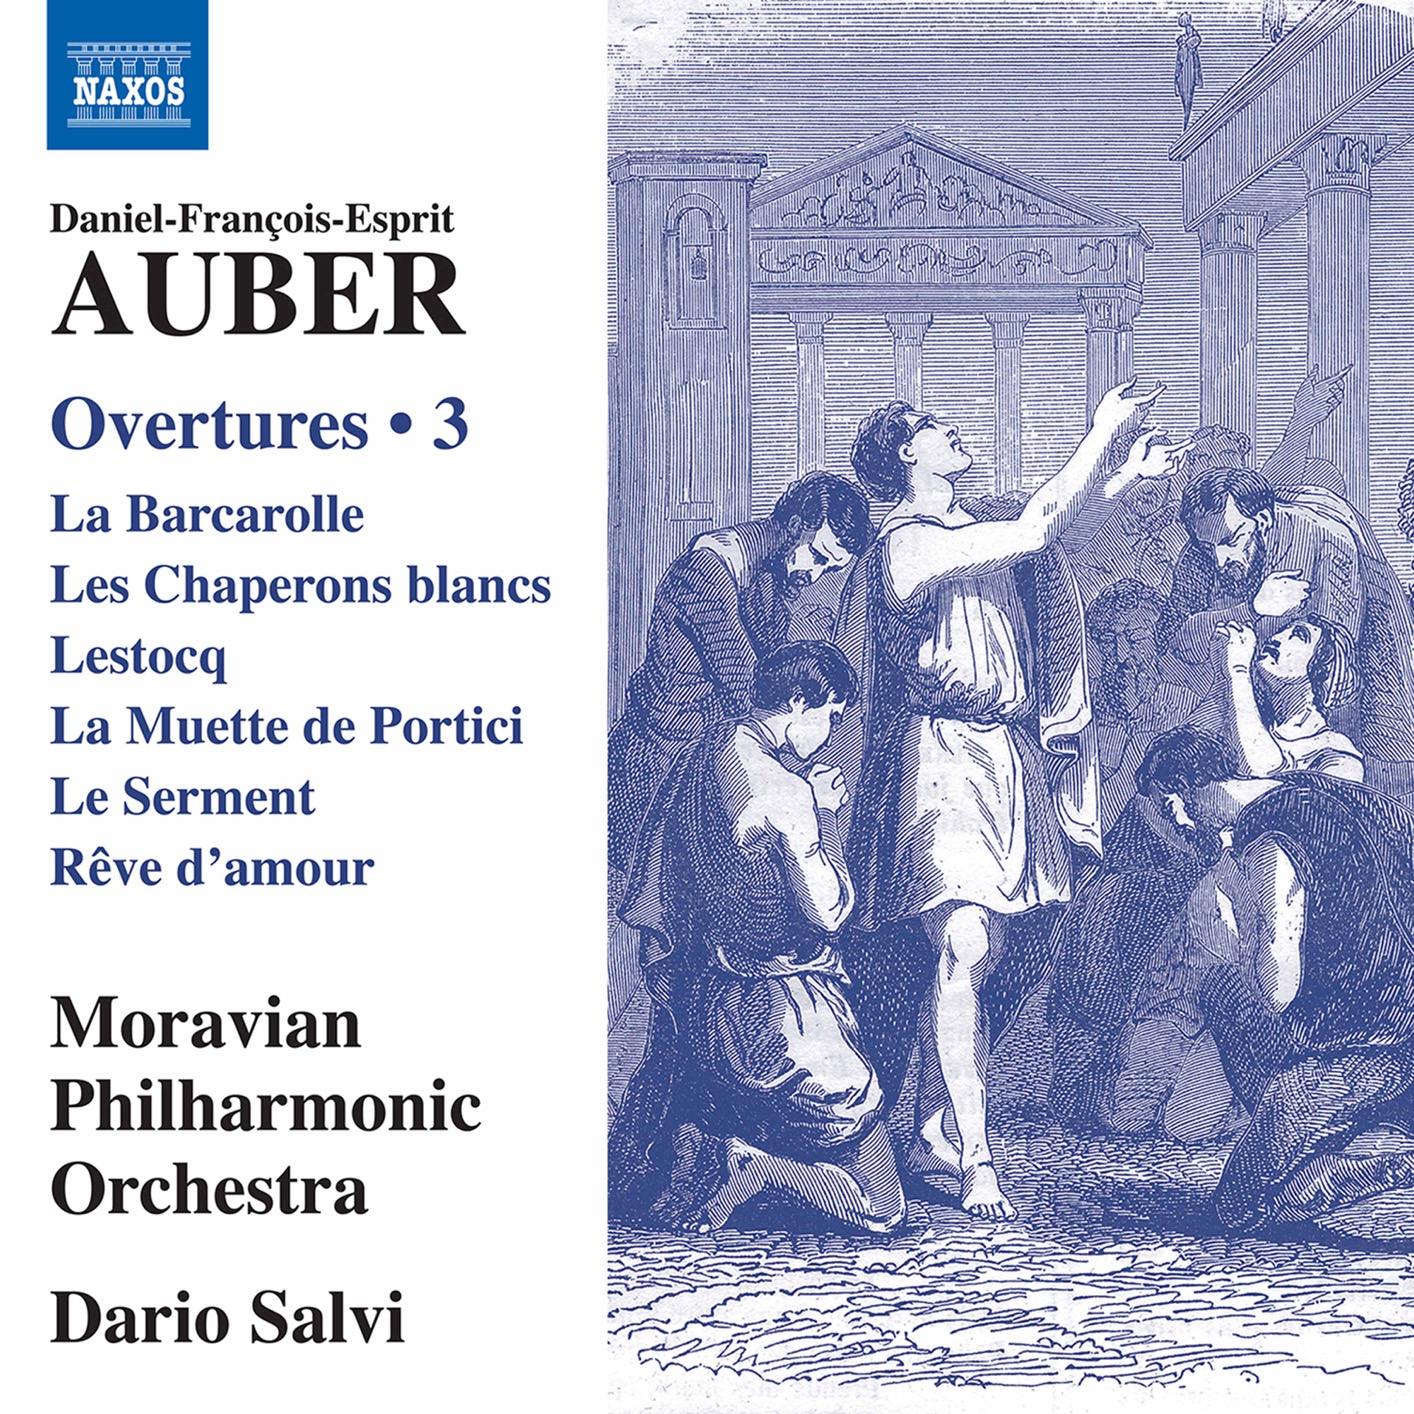 Moravian Philharmonic Orchestra, Dario Salvi – Auber Overtures, Vol. 3 (2021) [FLAC 24bit/96kHz]